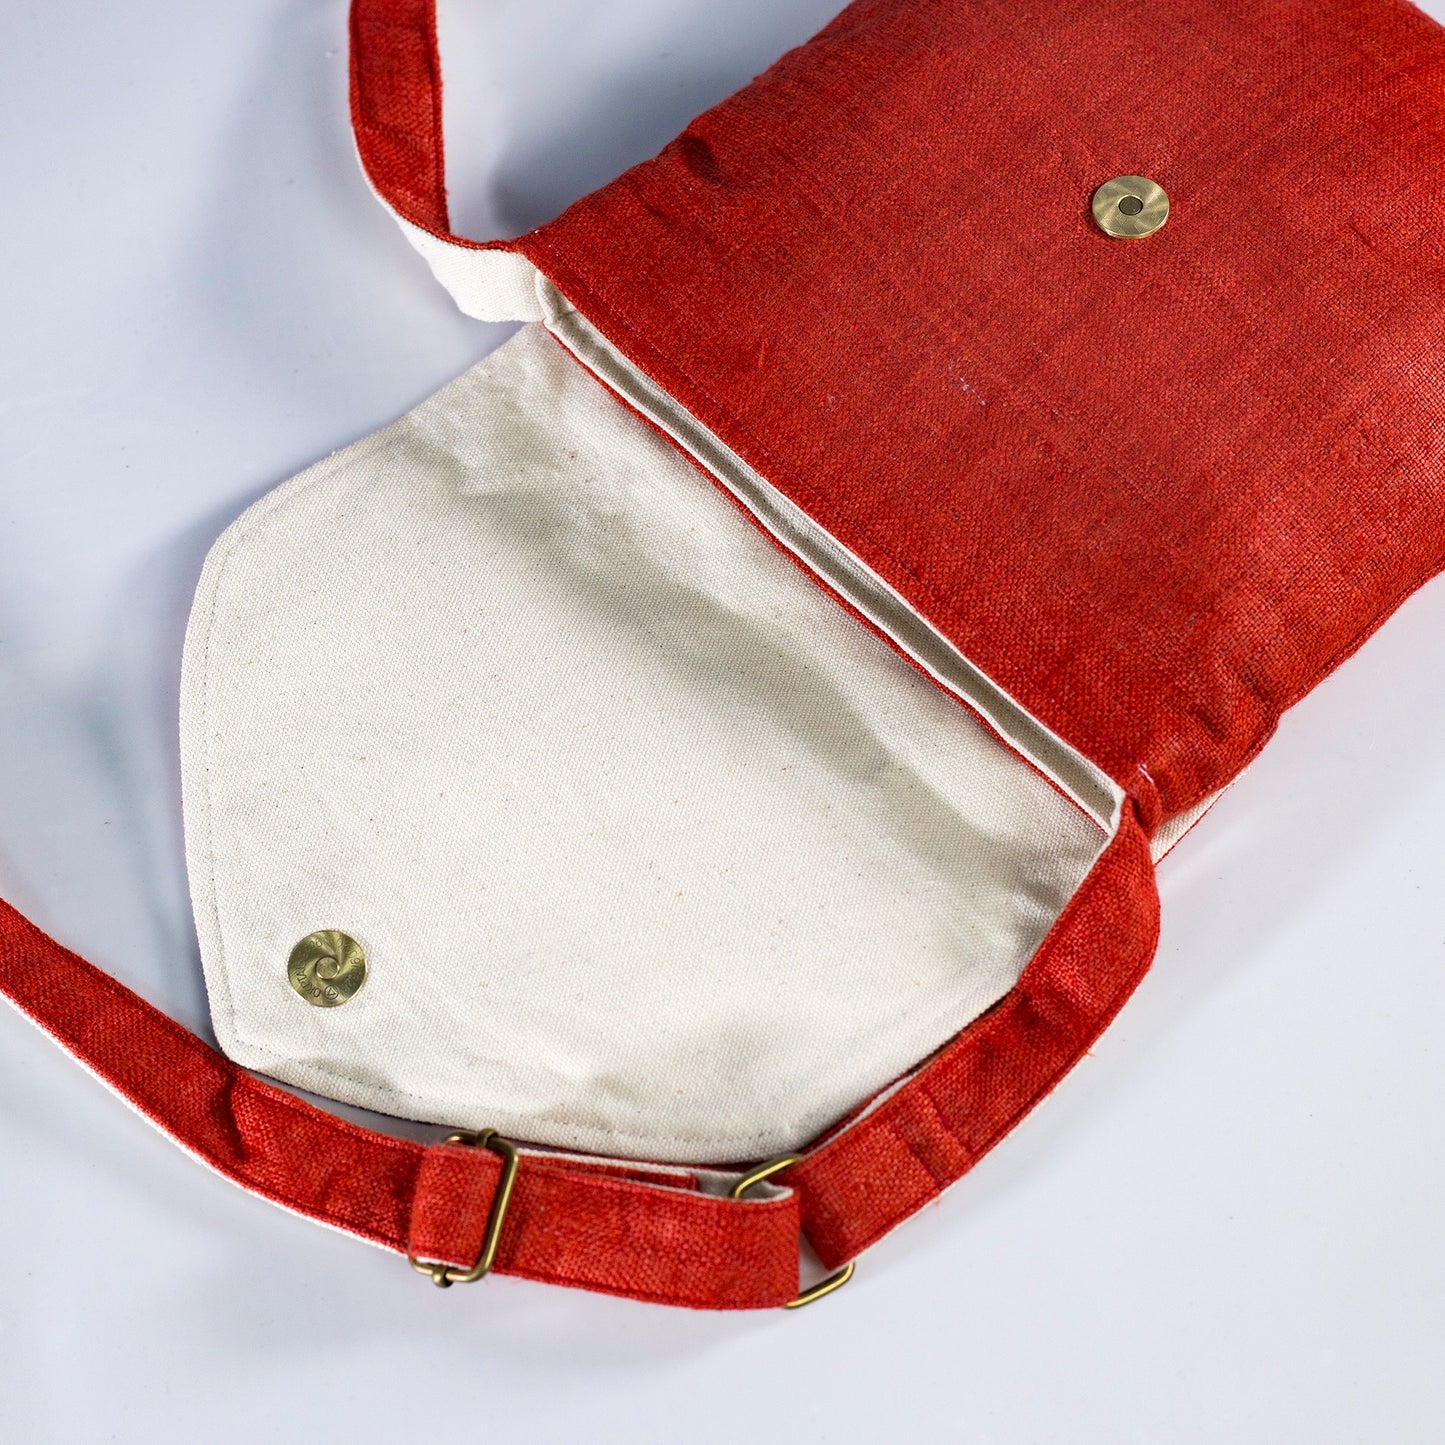 Purity Collection: Cross-body väska, naturlig hampa i RÖTT, vintage patch